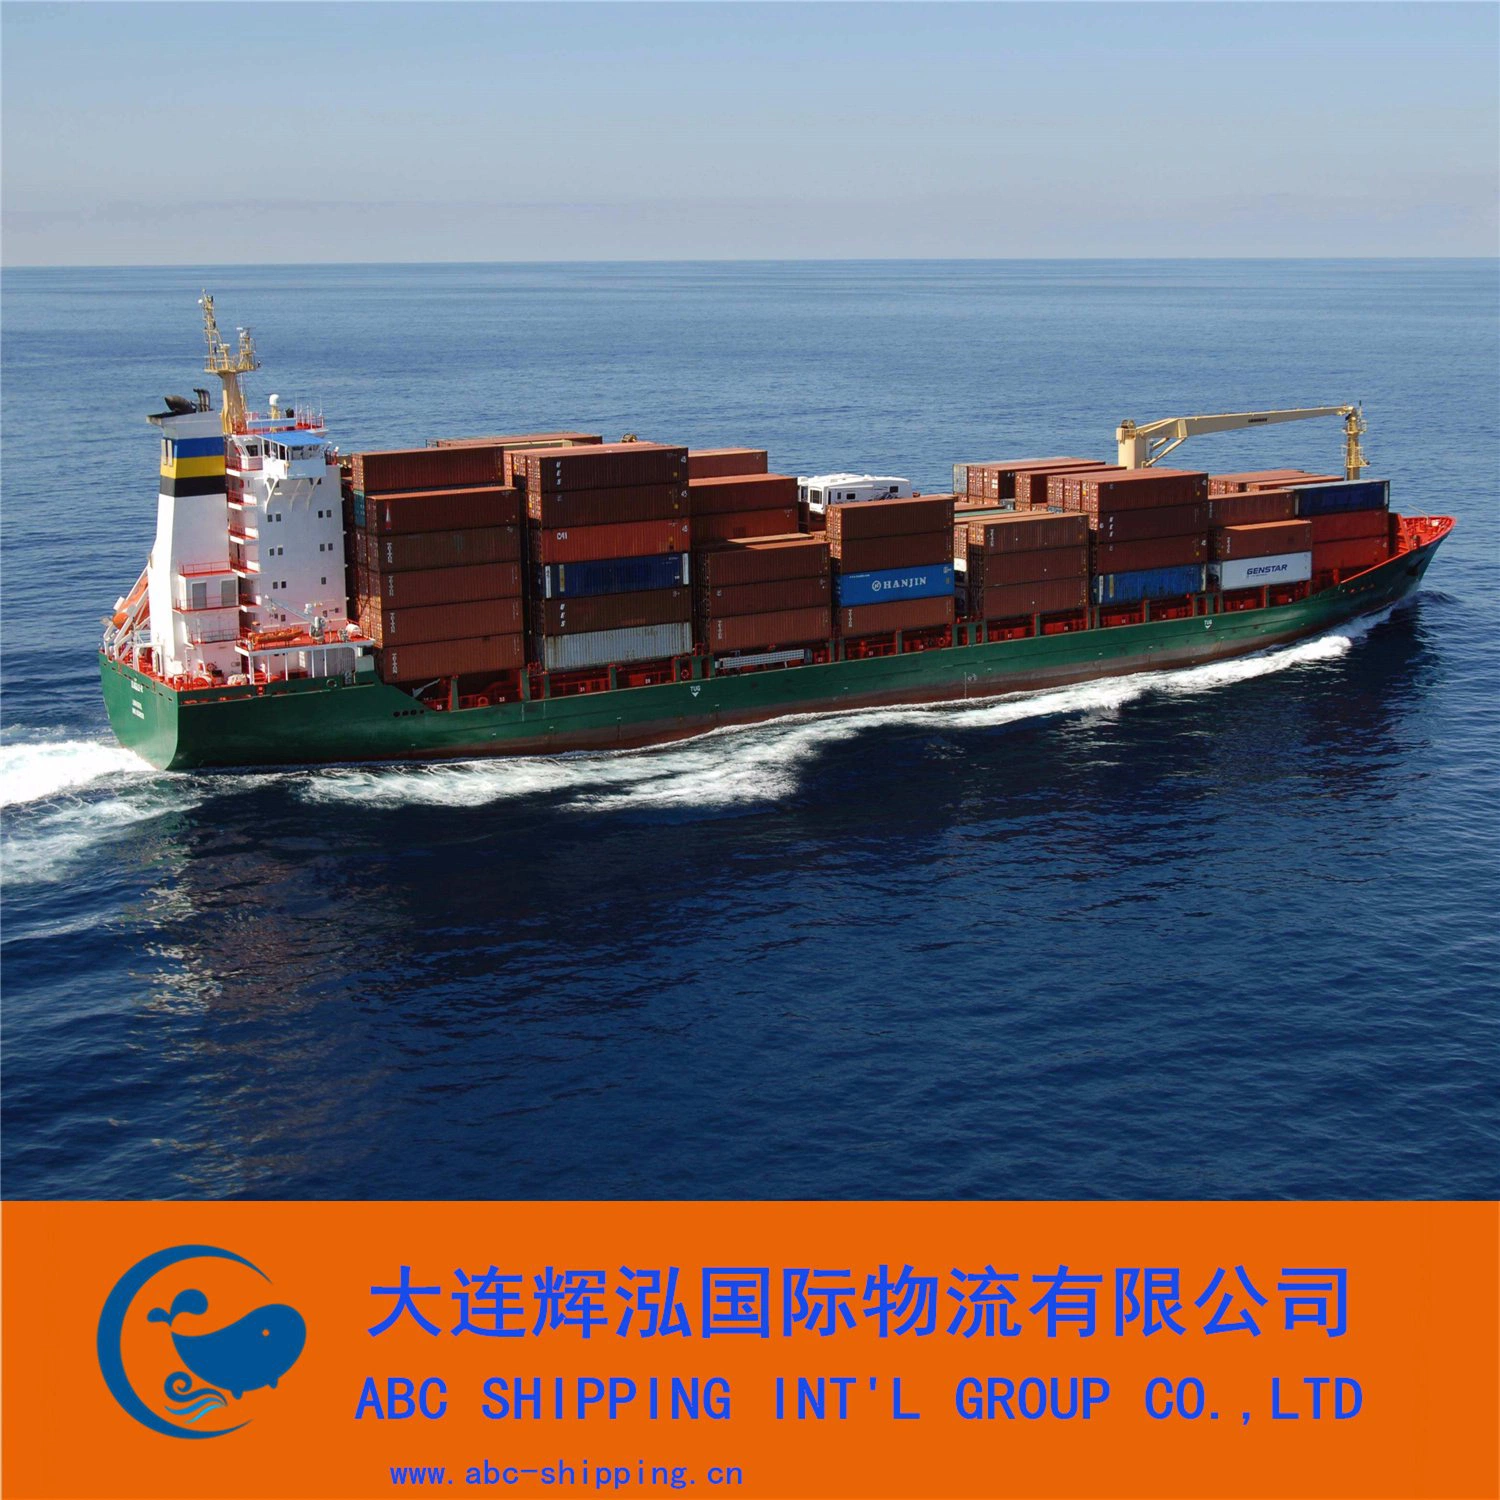 Fastest International Cargo Transportation Service System